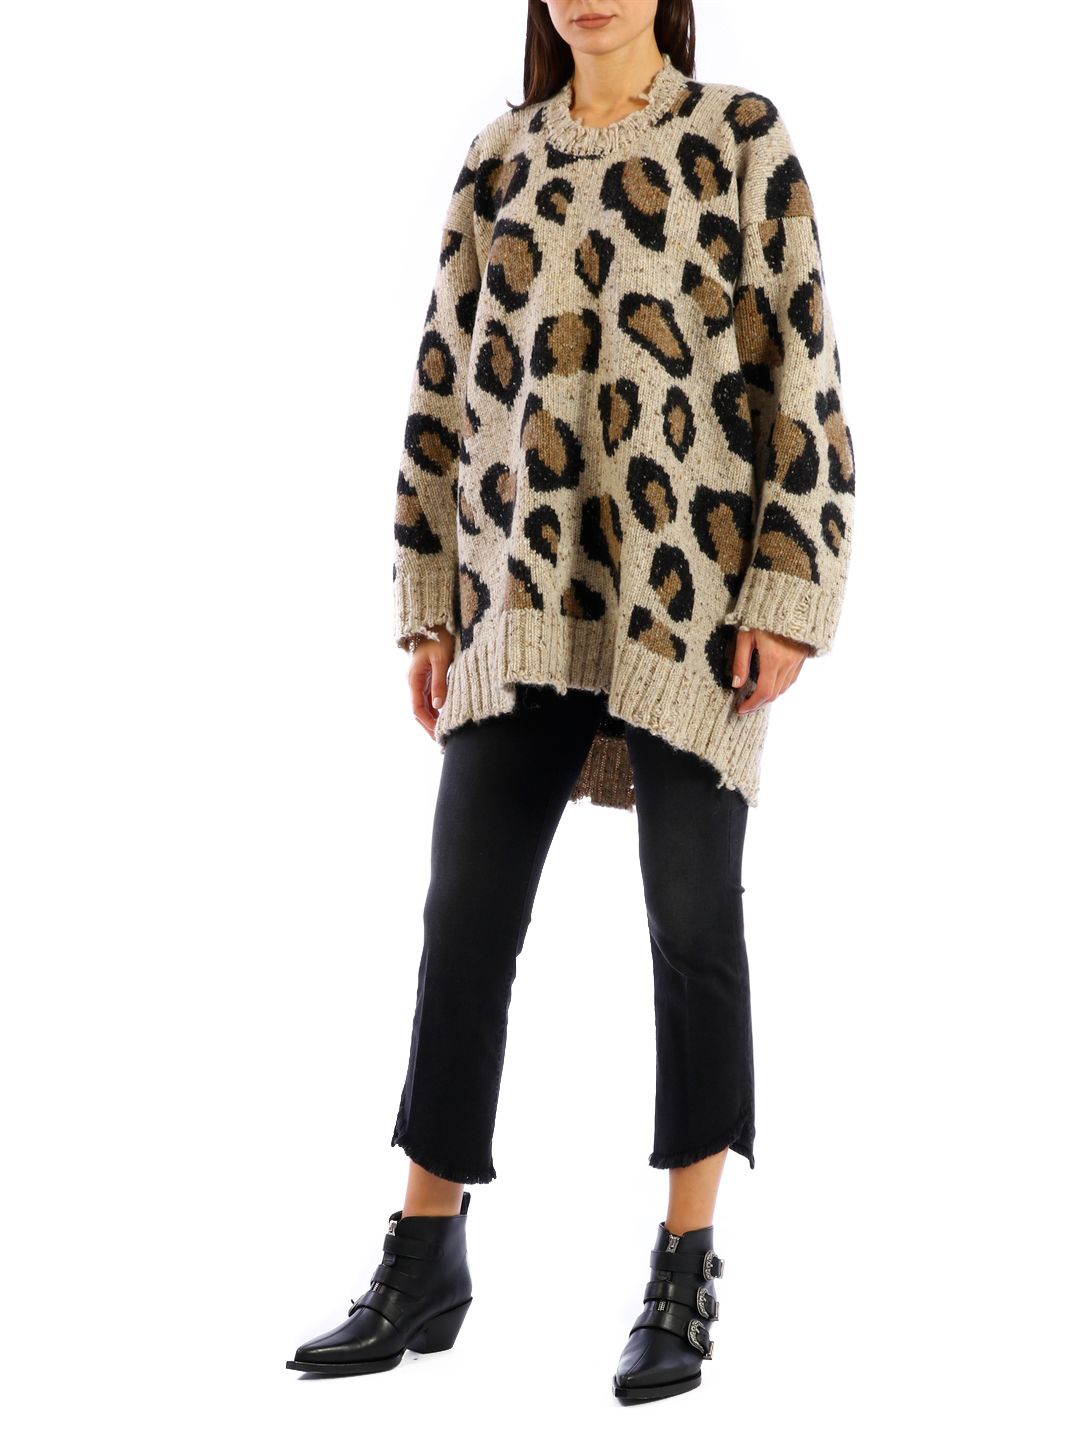 R13 Oversized Leopard Print Sweater for Women - FW19